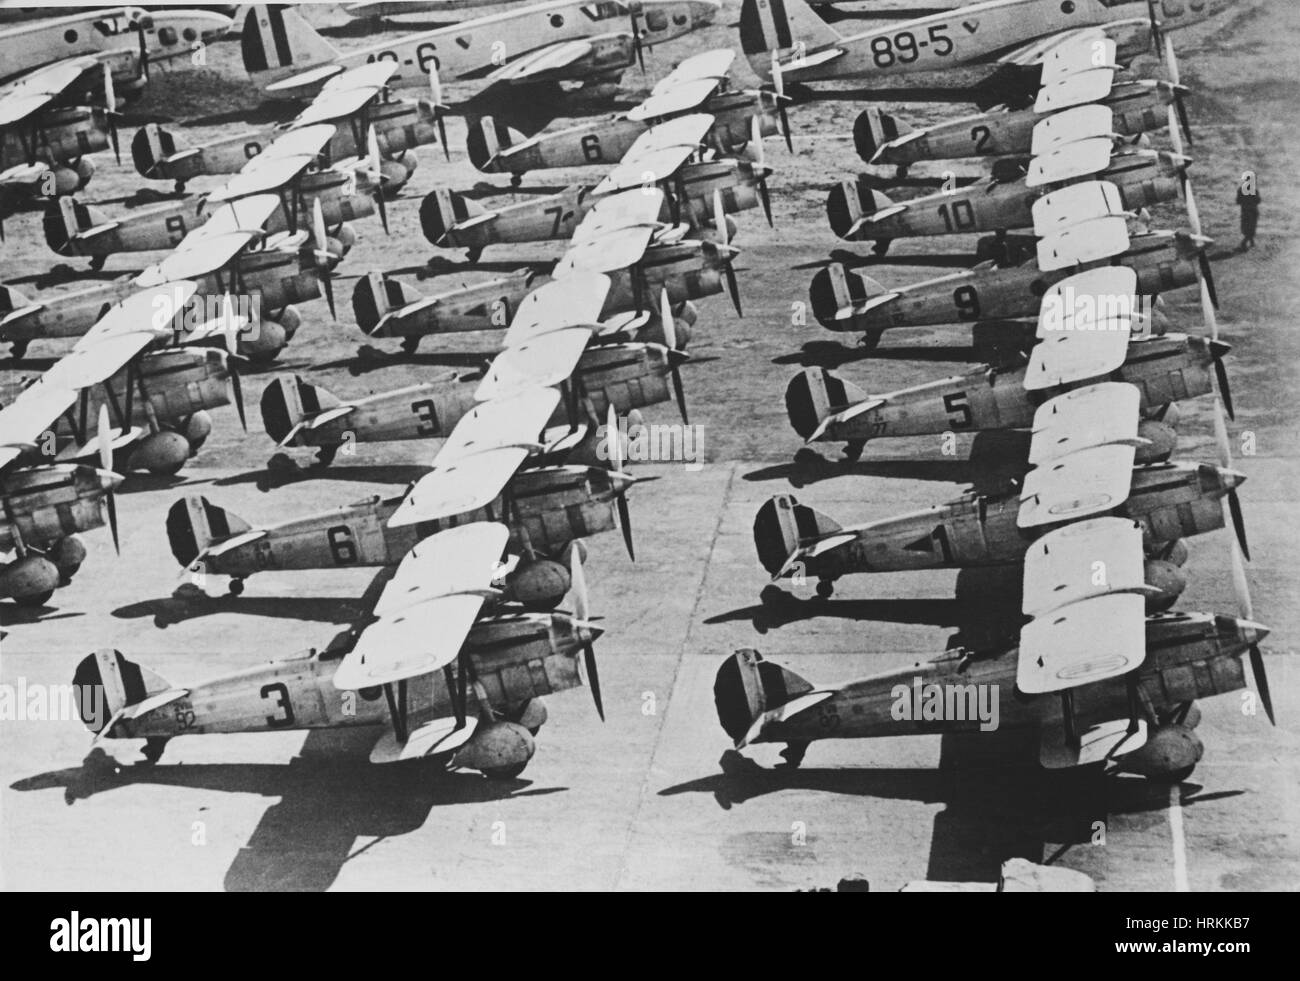 Aviones de combate italiano Foto de stock